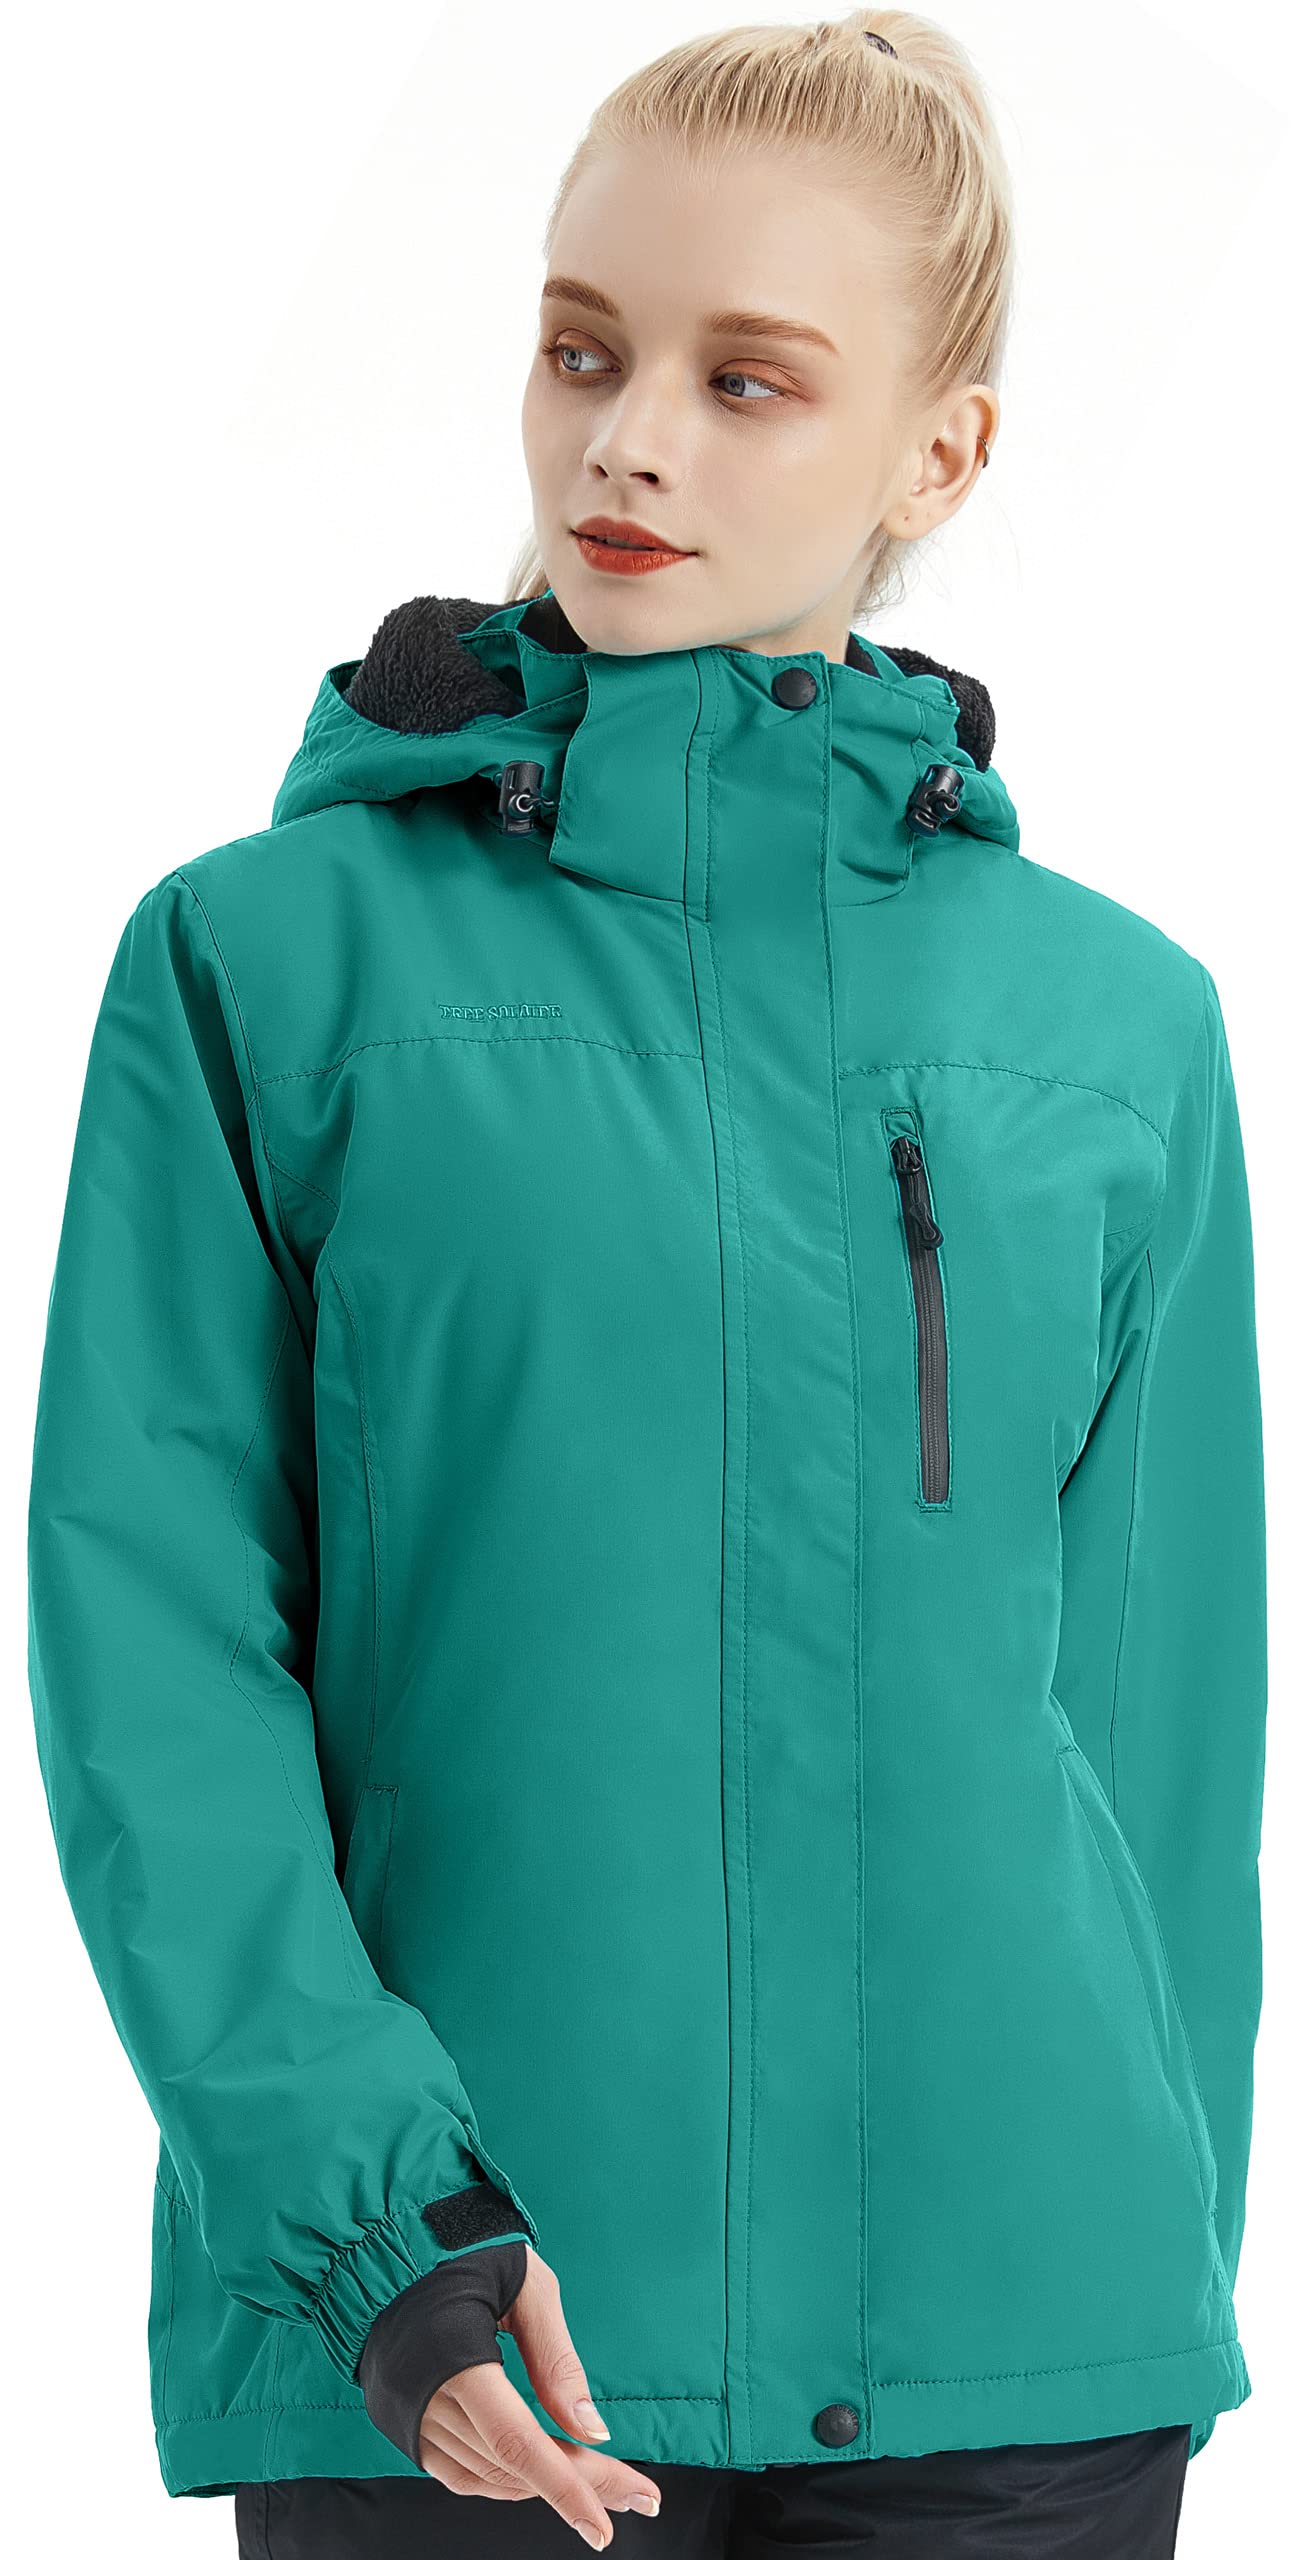 FREE SOLDIER Womens Waterproof Ski Snow Jacket Fleece Lined Warm Winter Rain Jacket with Hood Fully Taped Seams(Lake Blue,M)